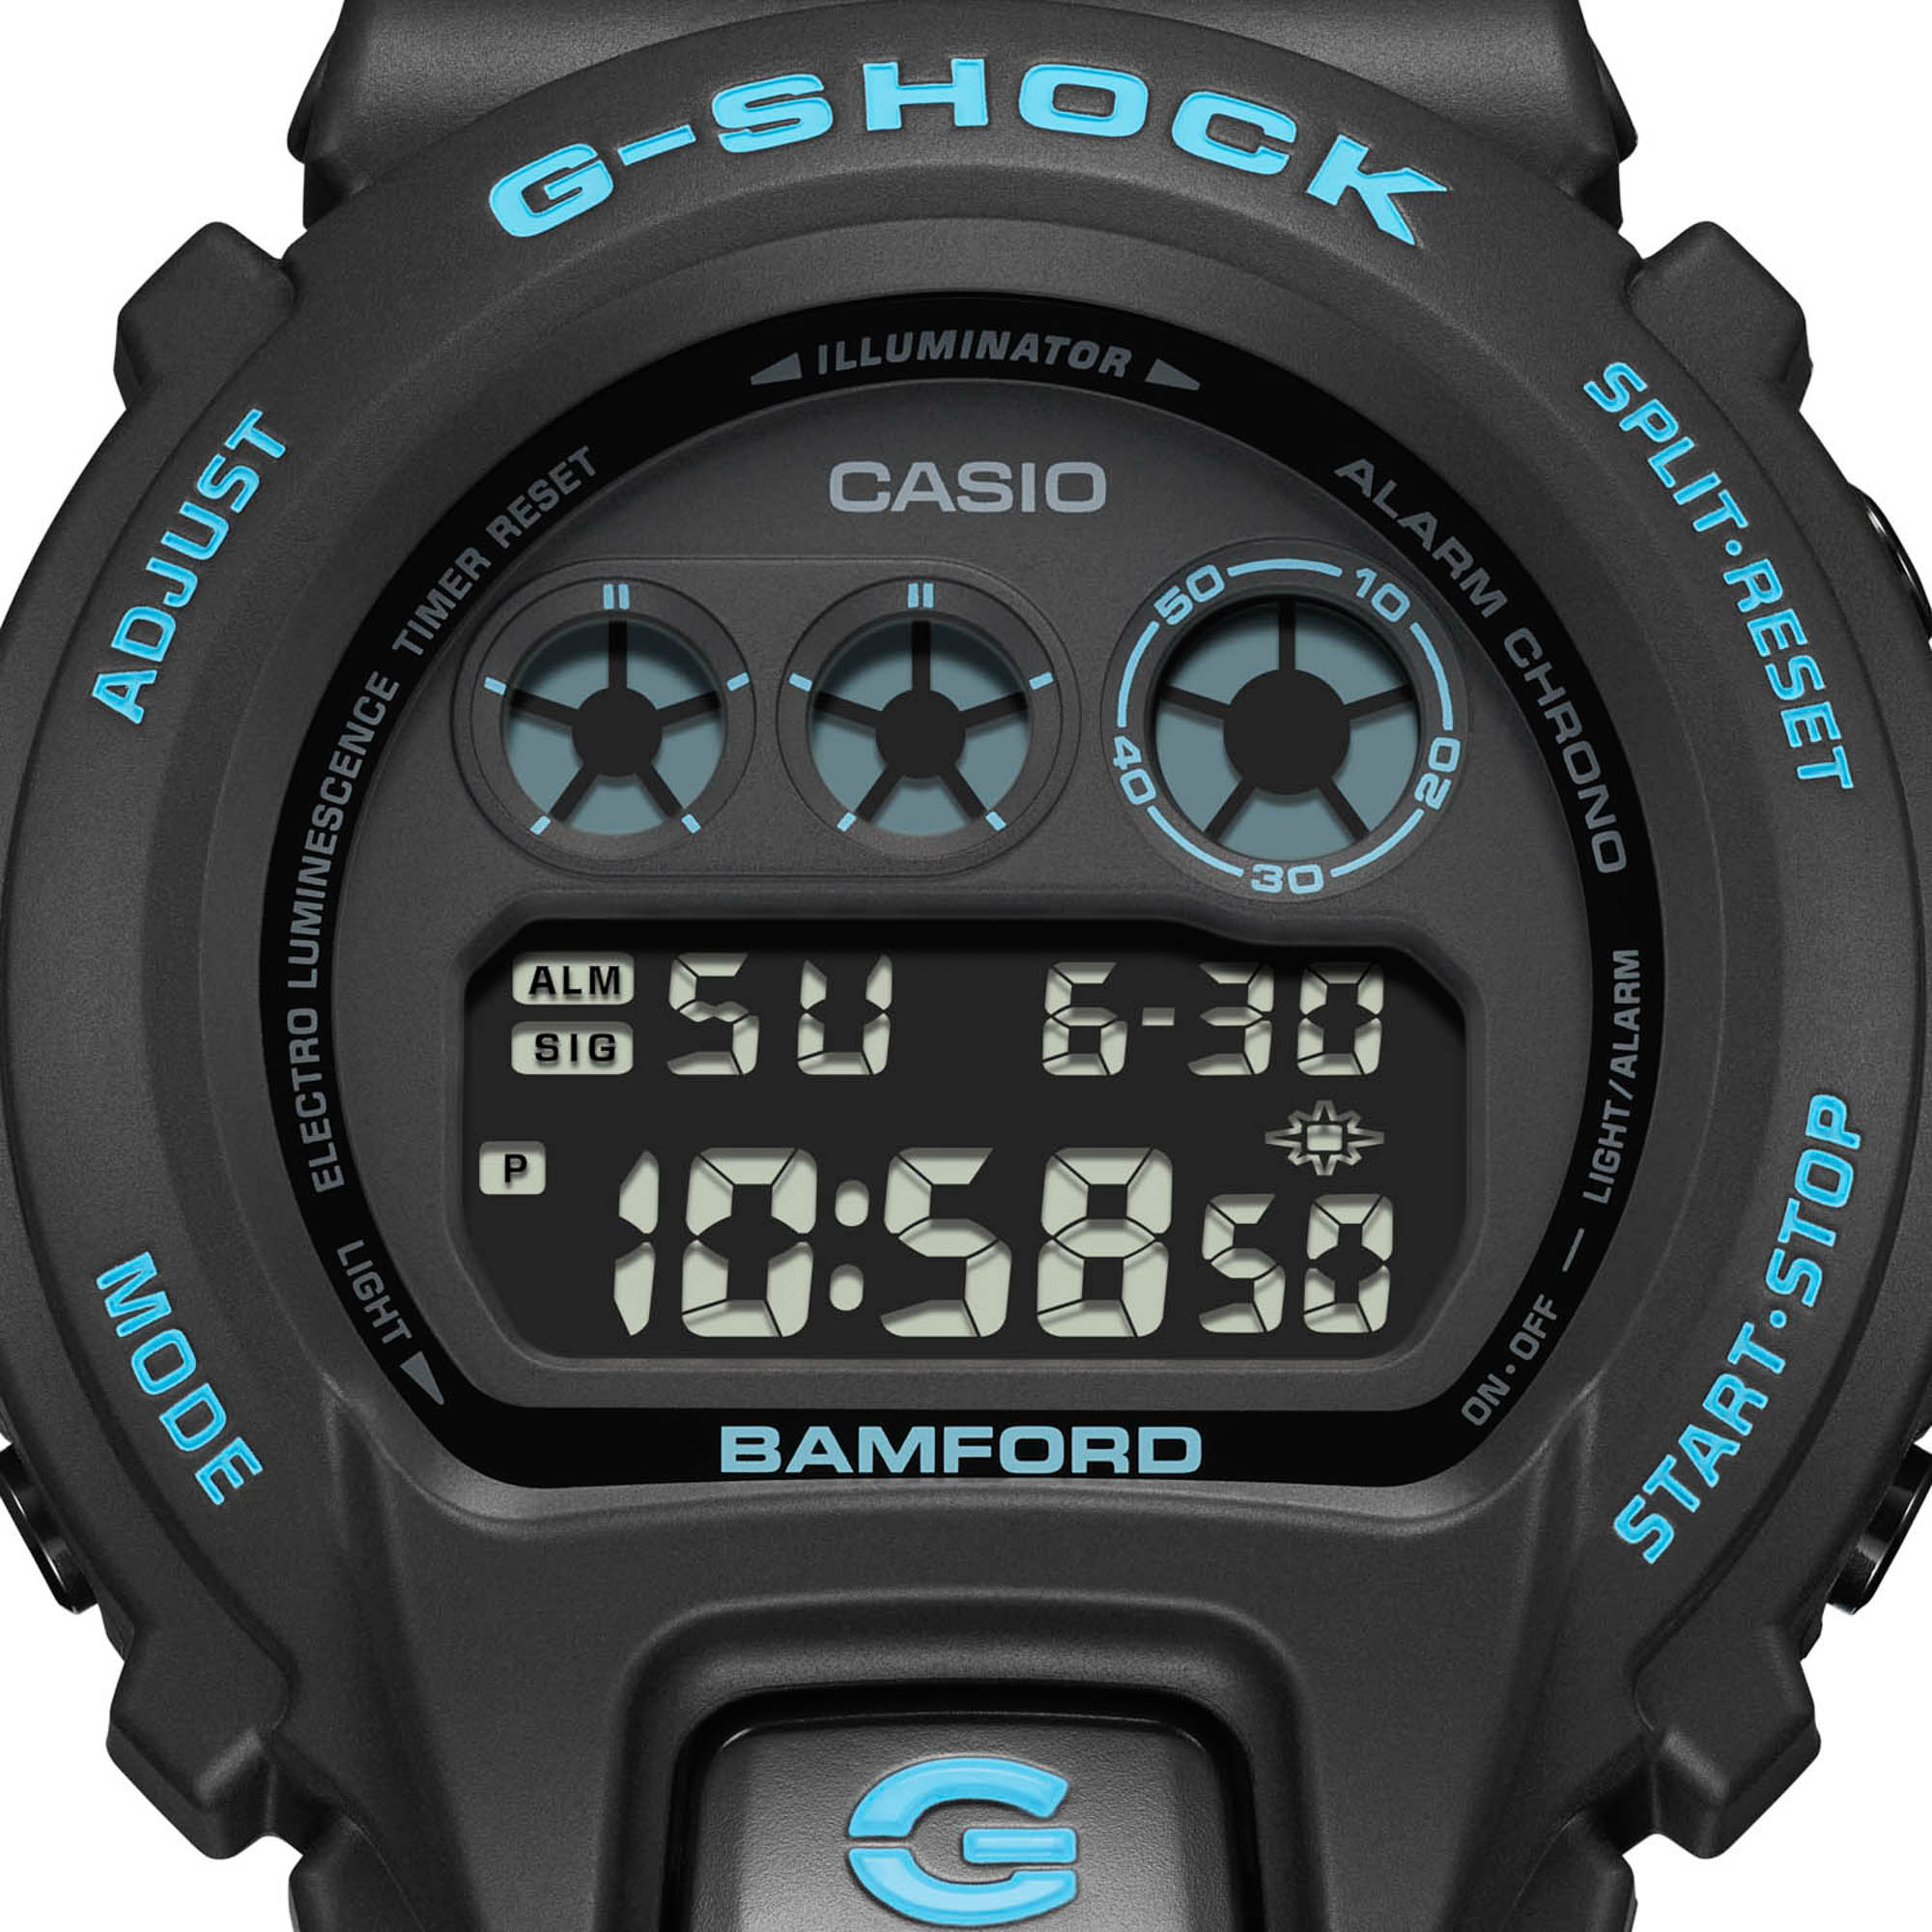 G-SHOCK x BAMFORD DW-6900BWD